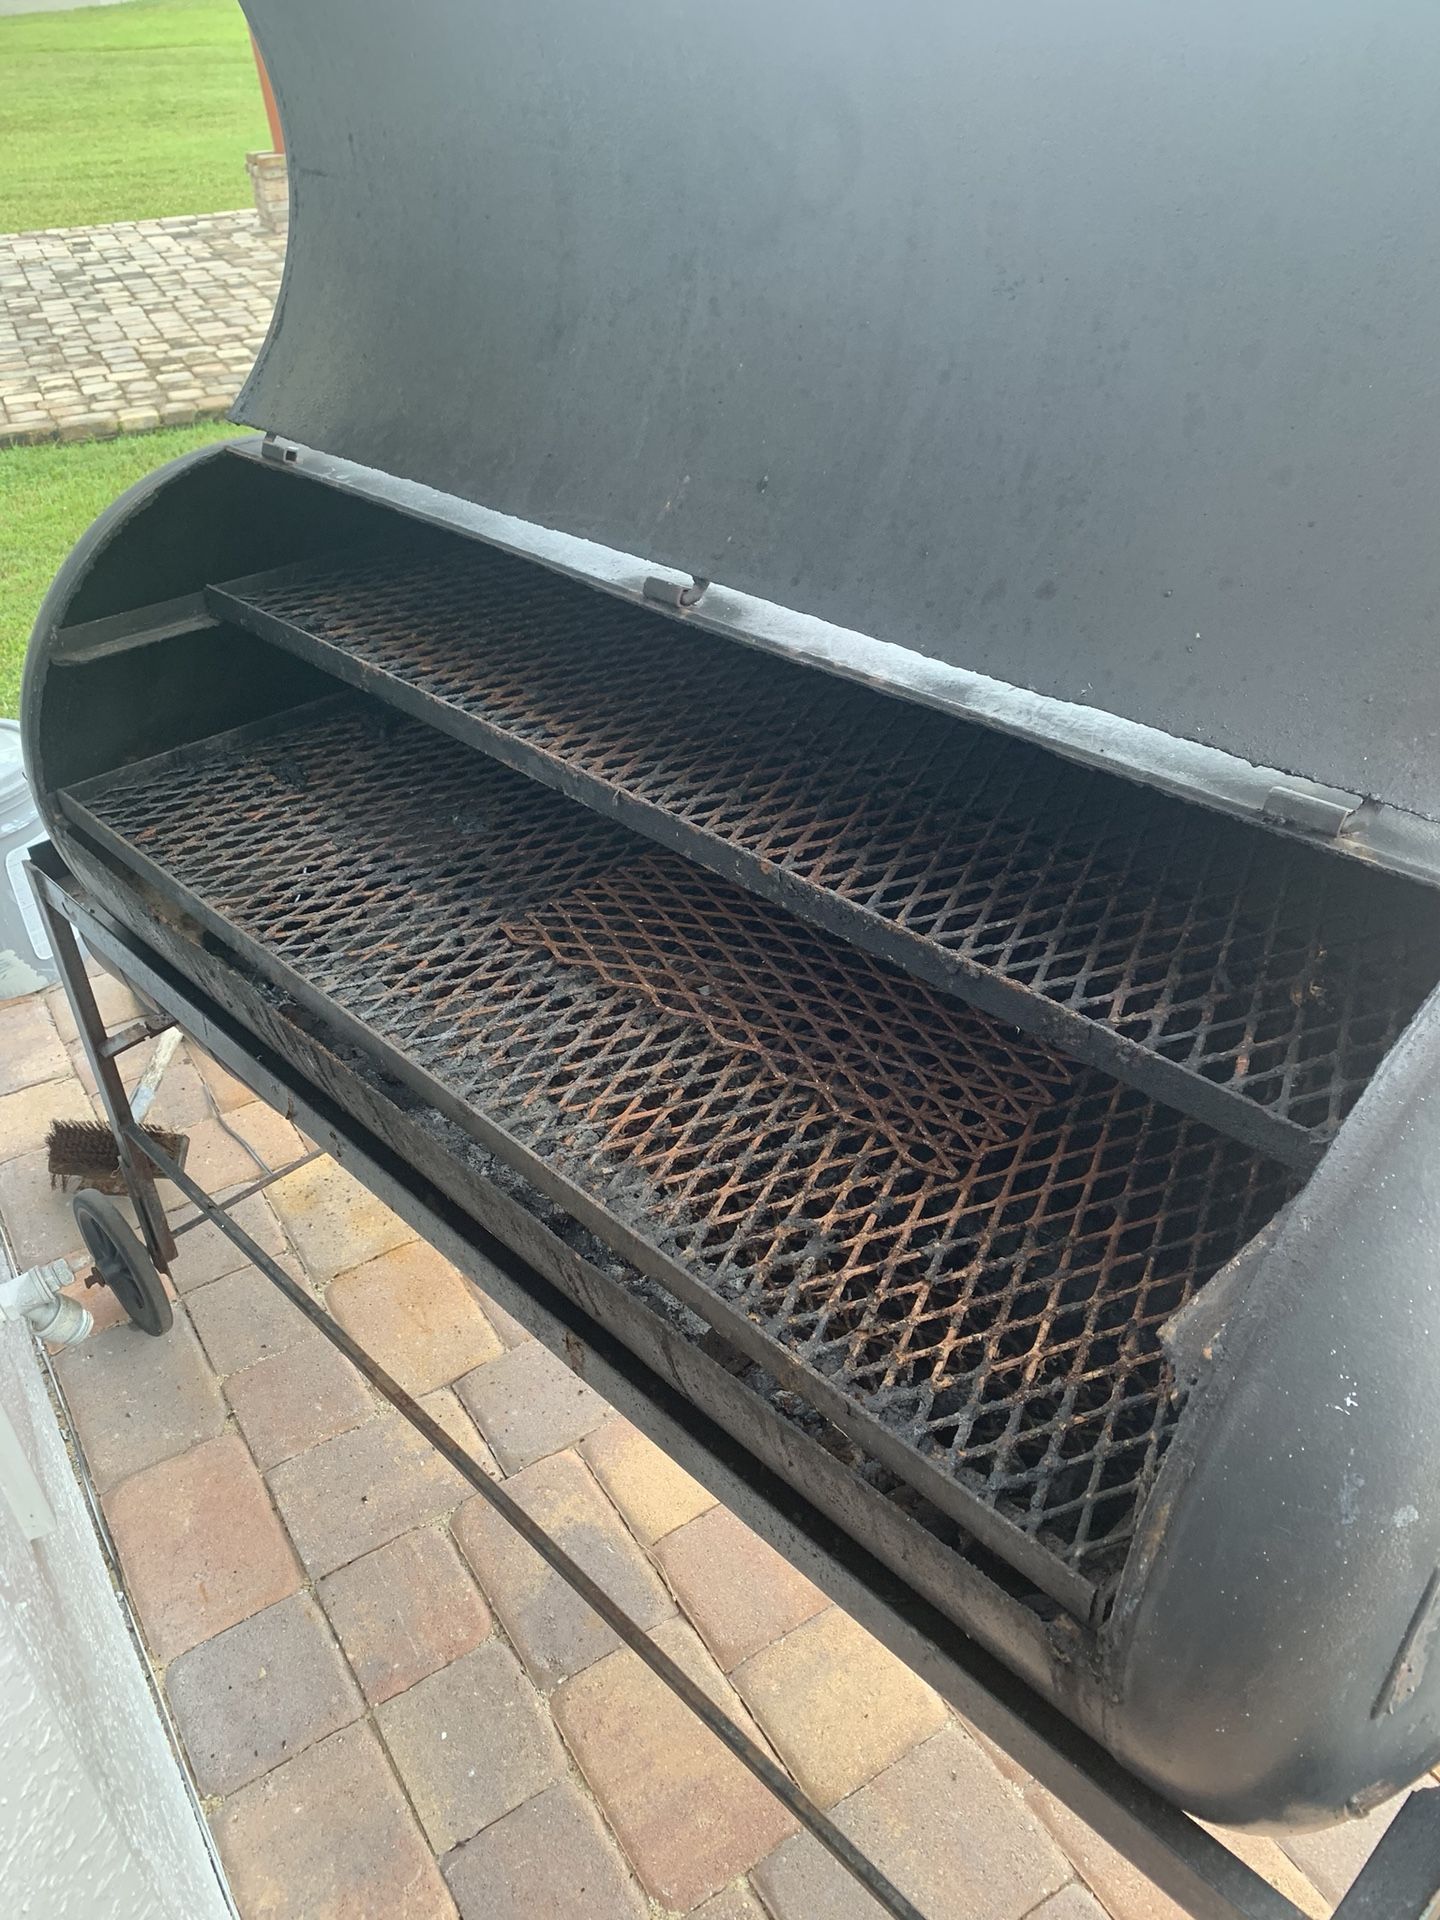 BBQ smoker grill